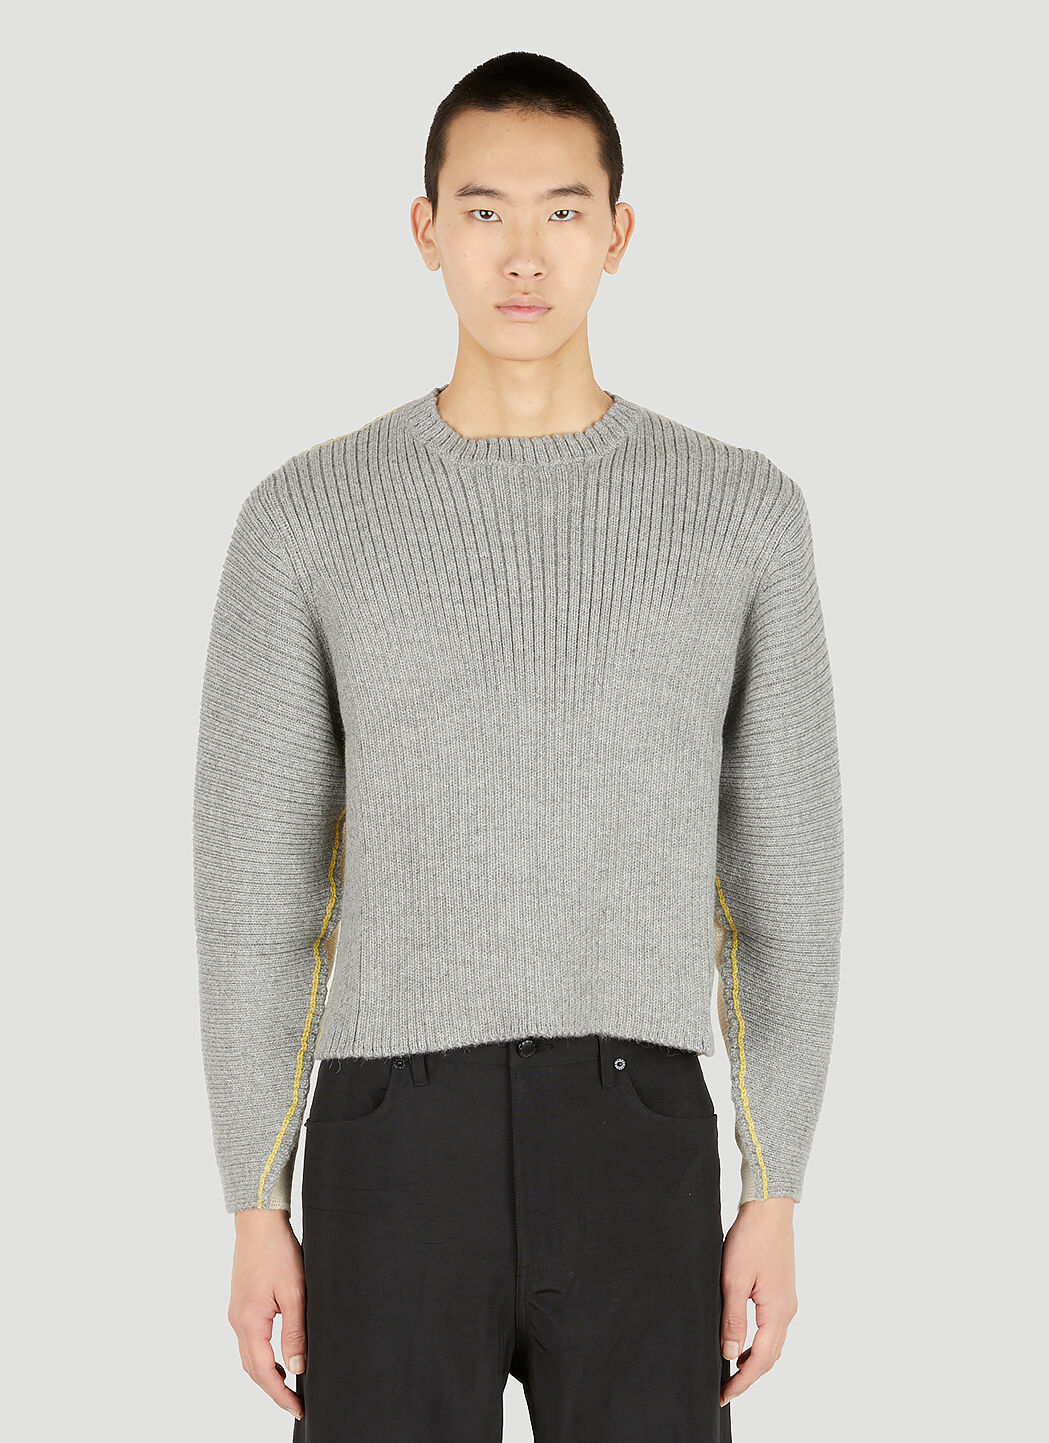 Eckhaus Latta Ash Sweater Grey eck0151003